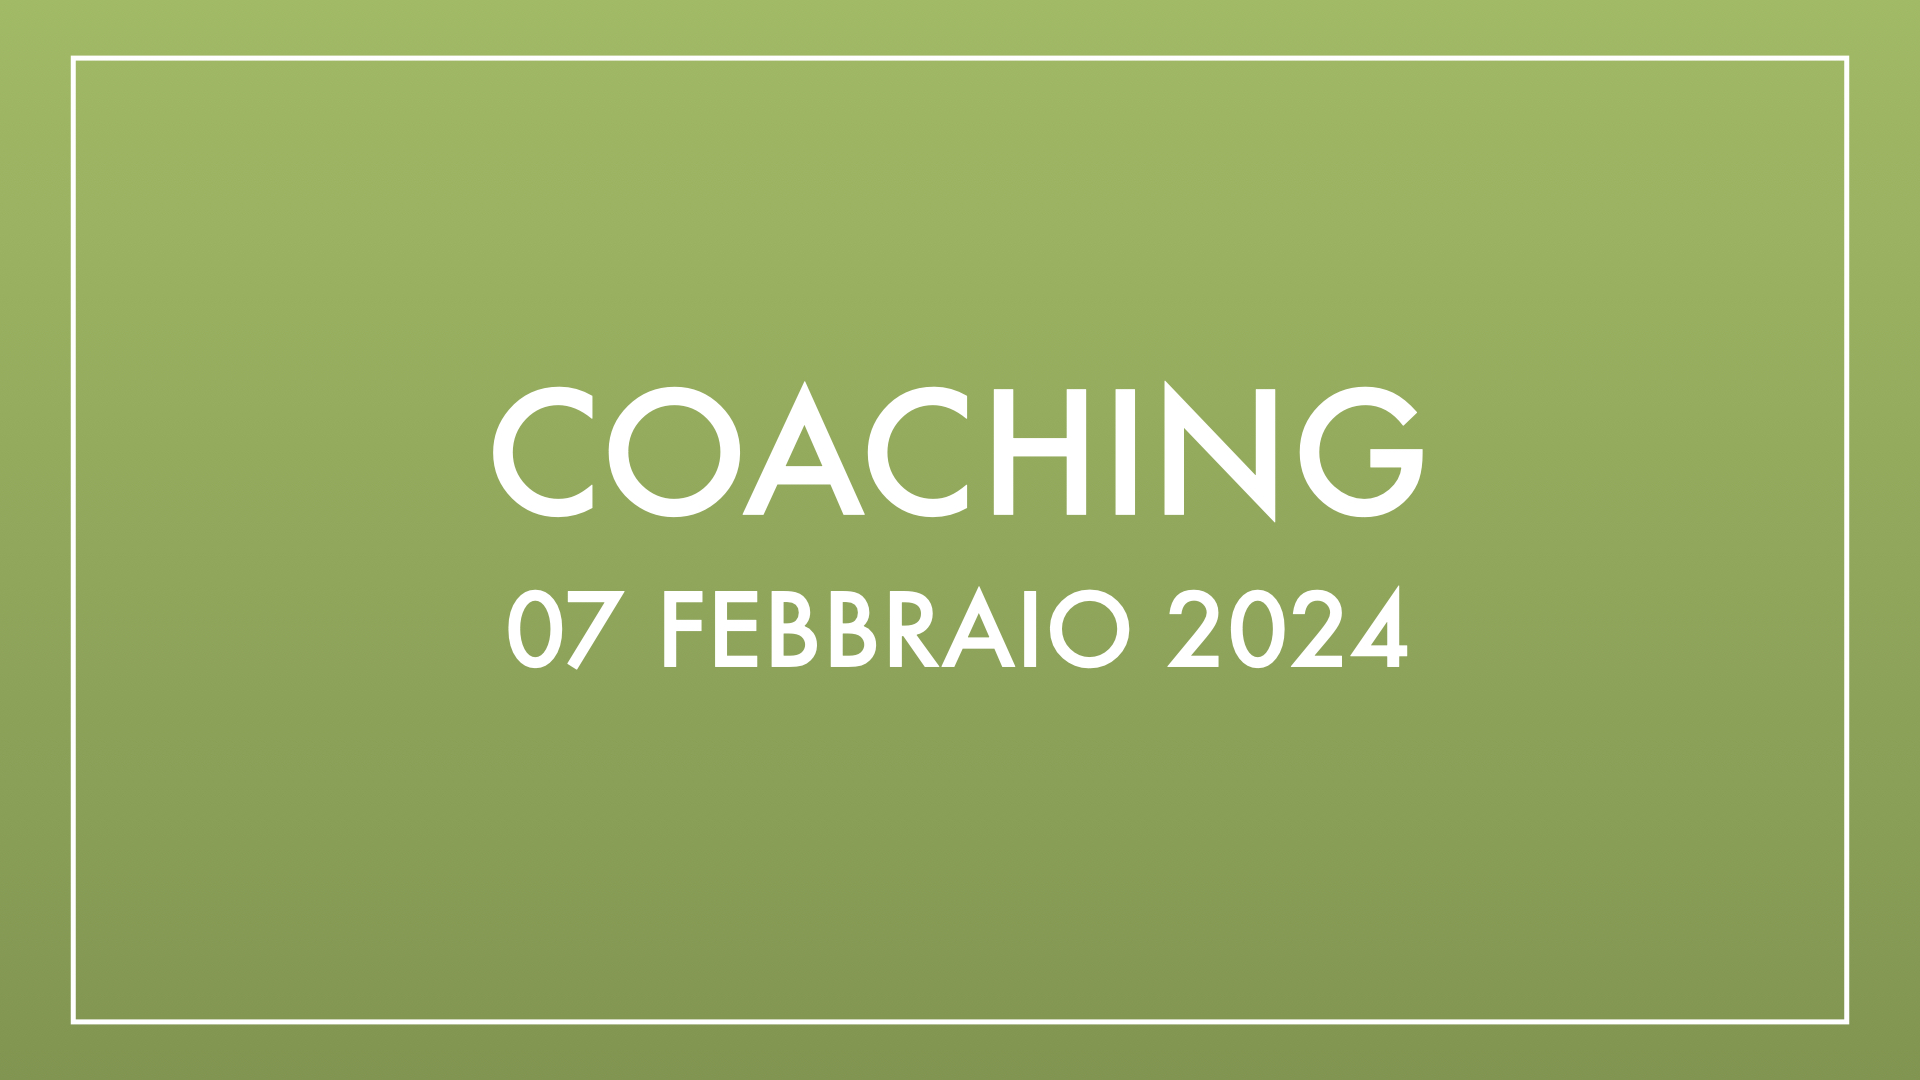 Coaching 07 febbraio 2024